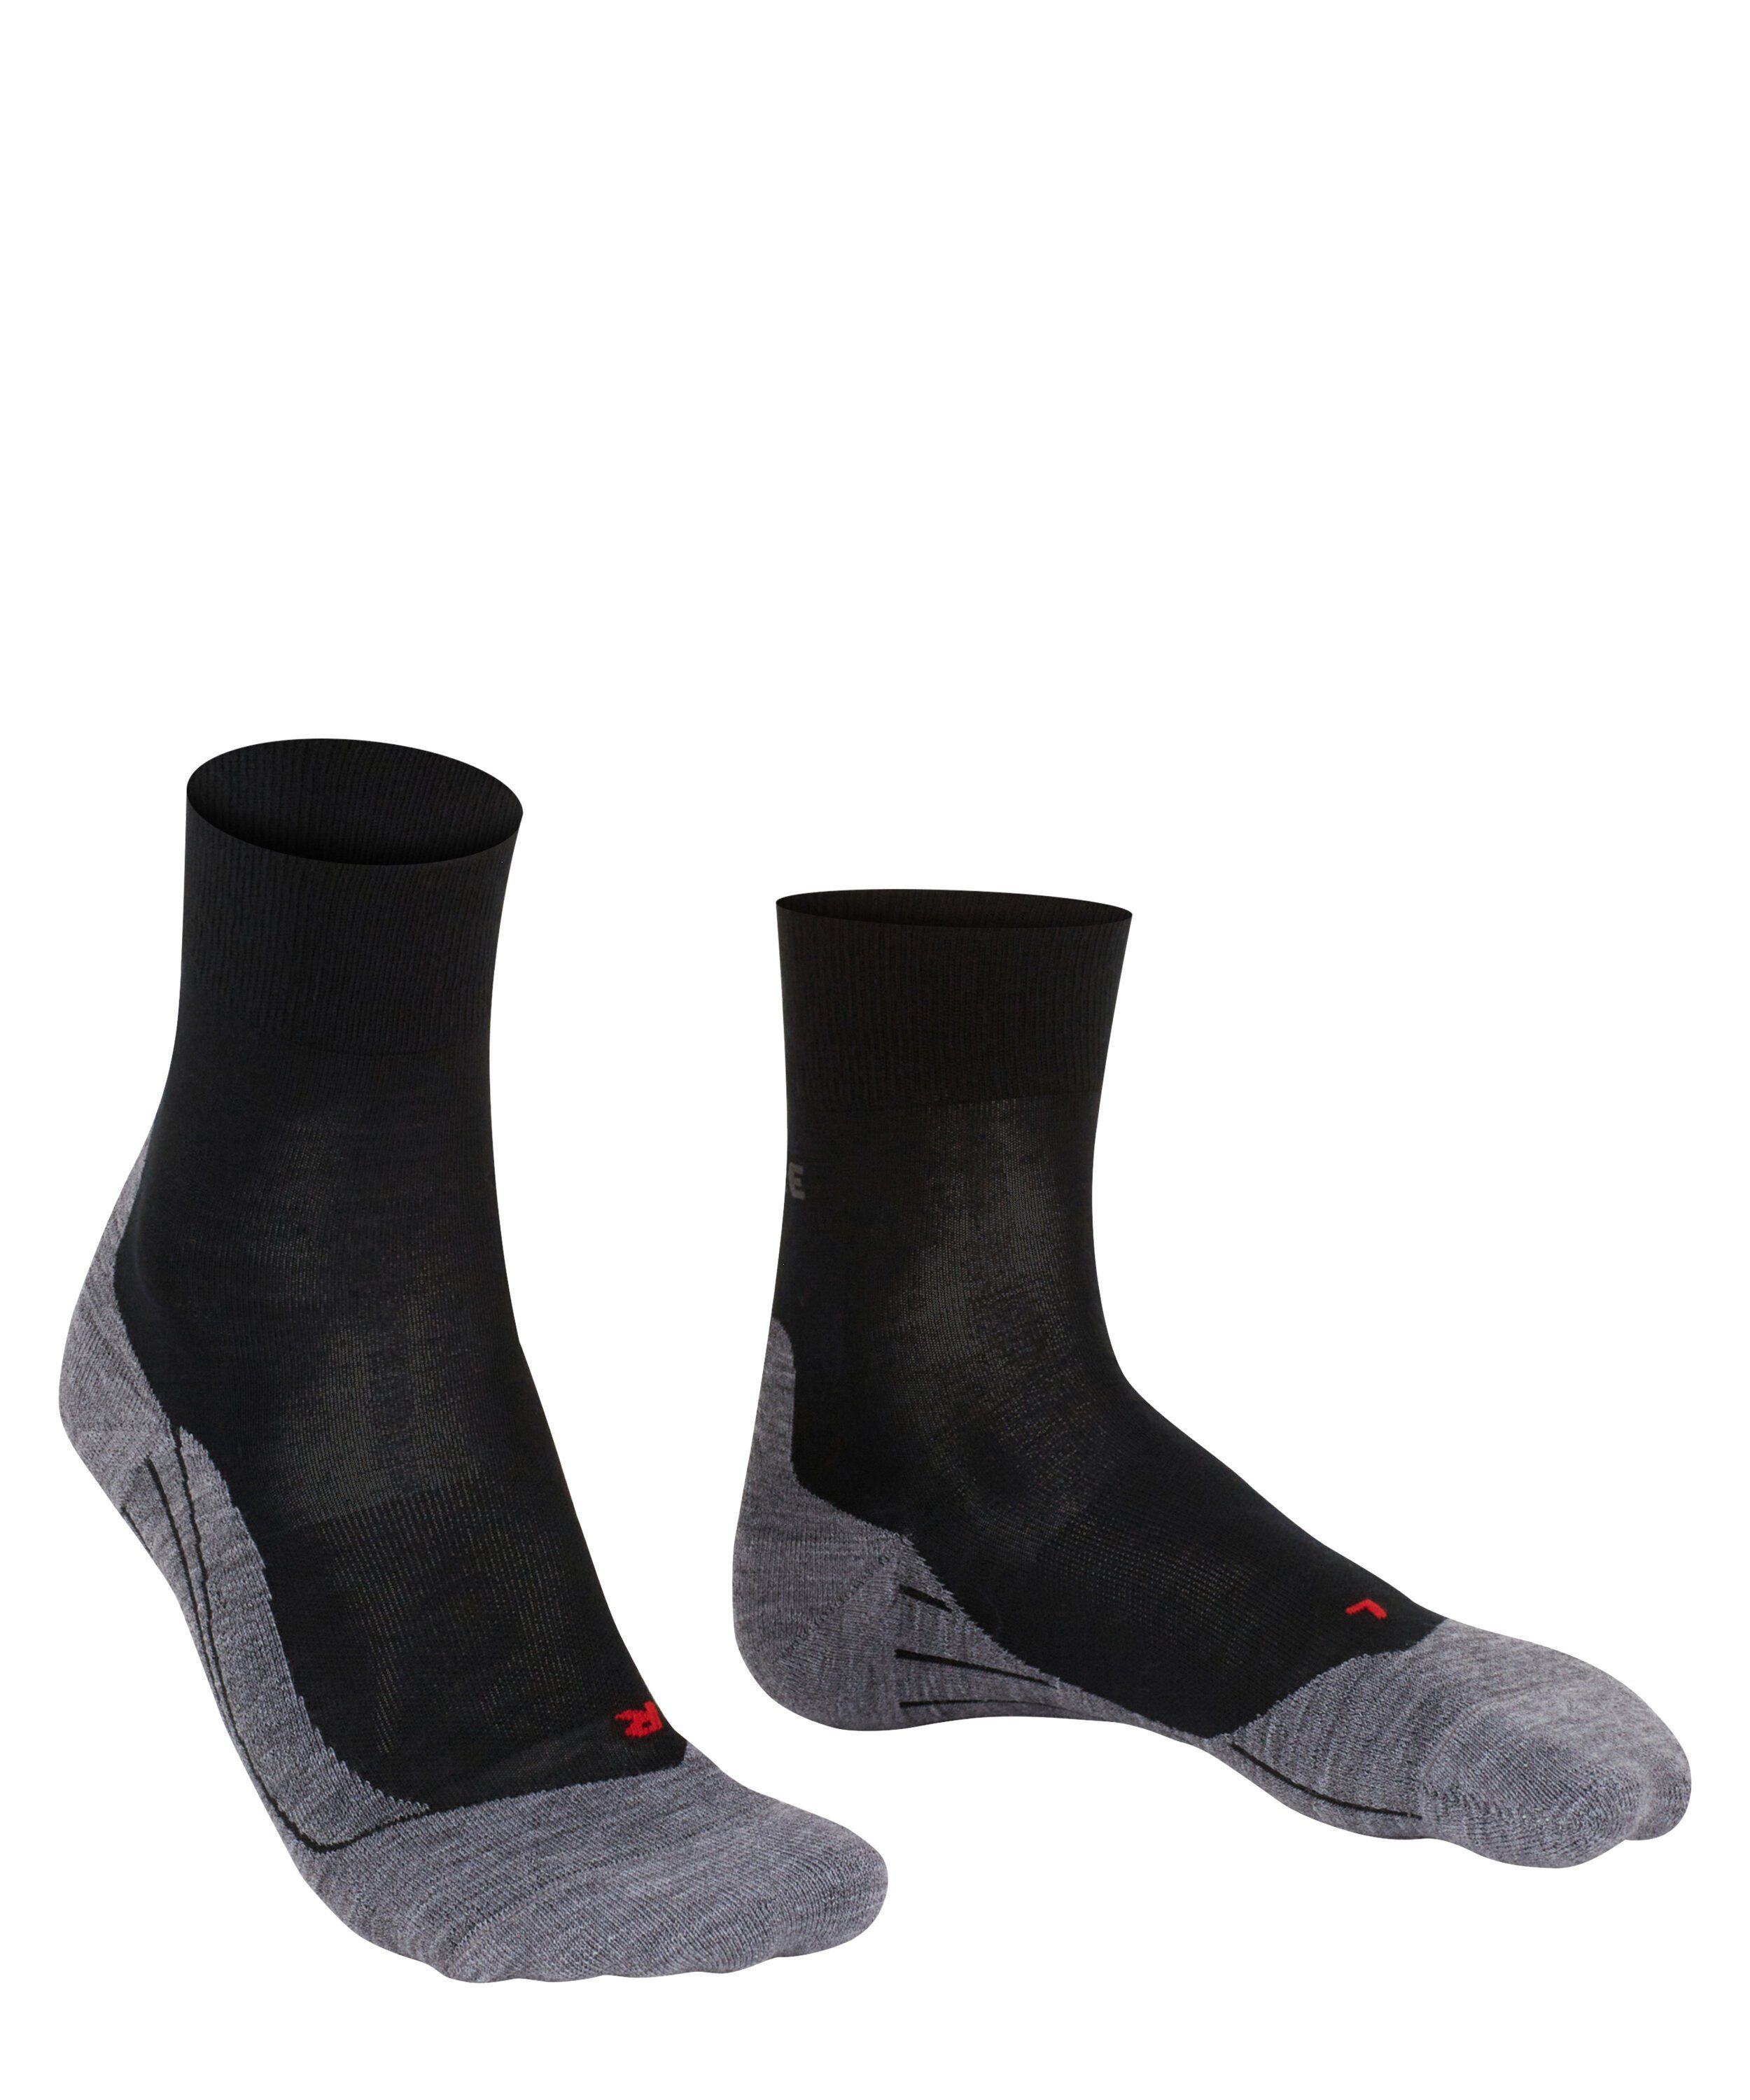 FALKE Laufsocken RU4 Endurance Wool Polsterung mit Laufsocke (3010) leichte mittlerer black-mix (1-Paar)